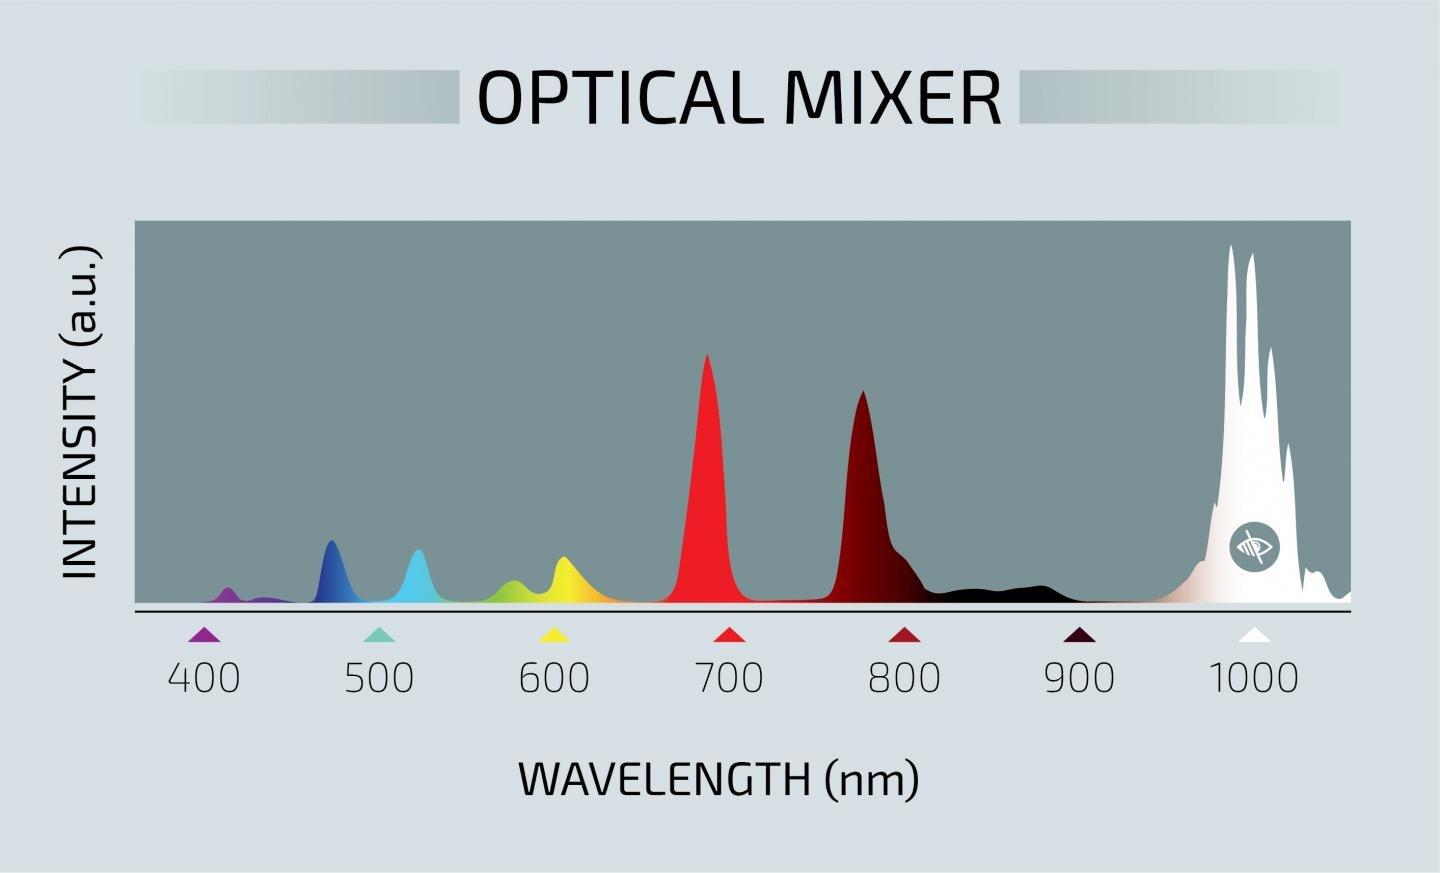 Light mixer generates 11 colors simultaneously, Sandia National Laboratories